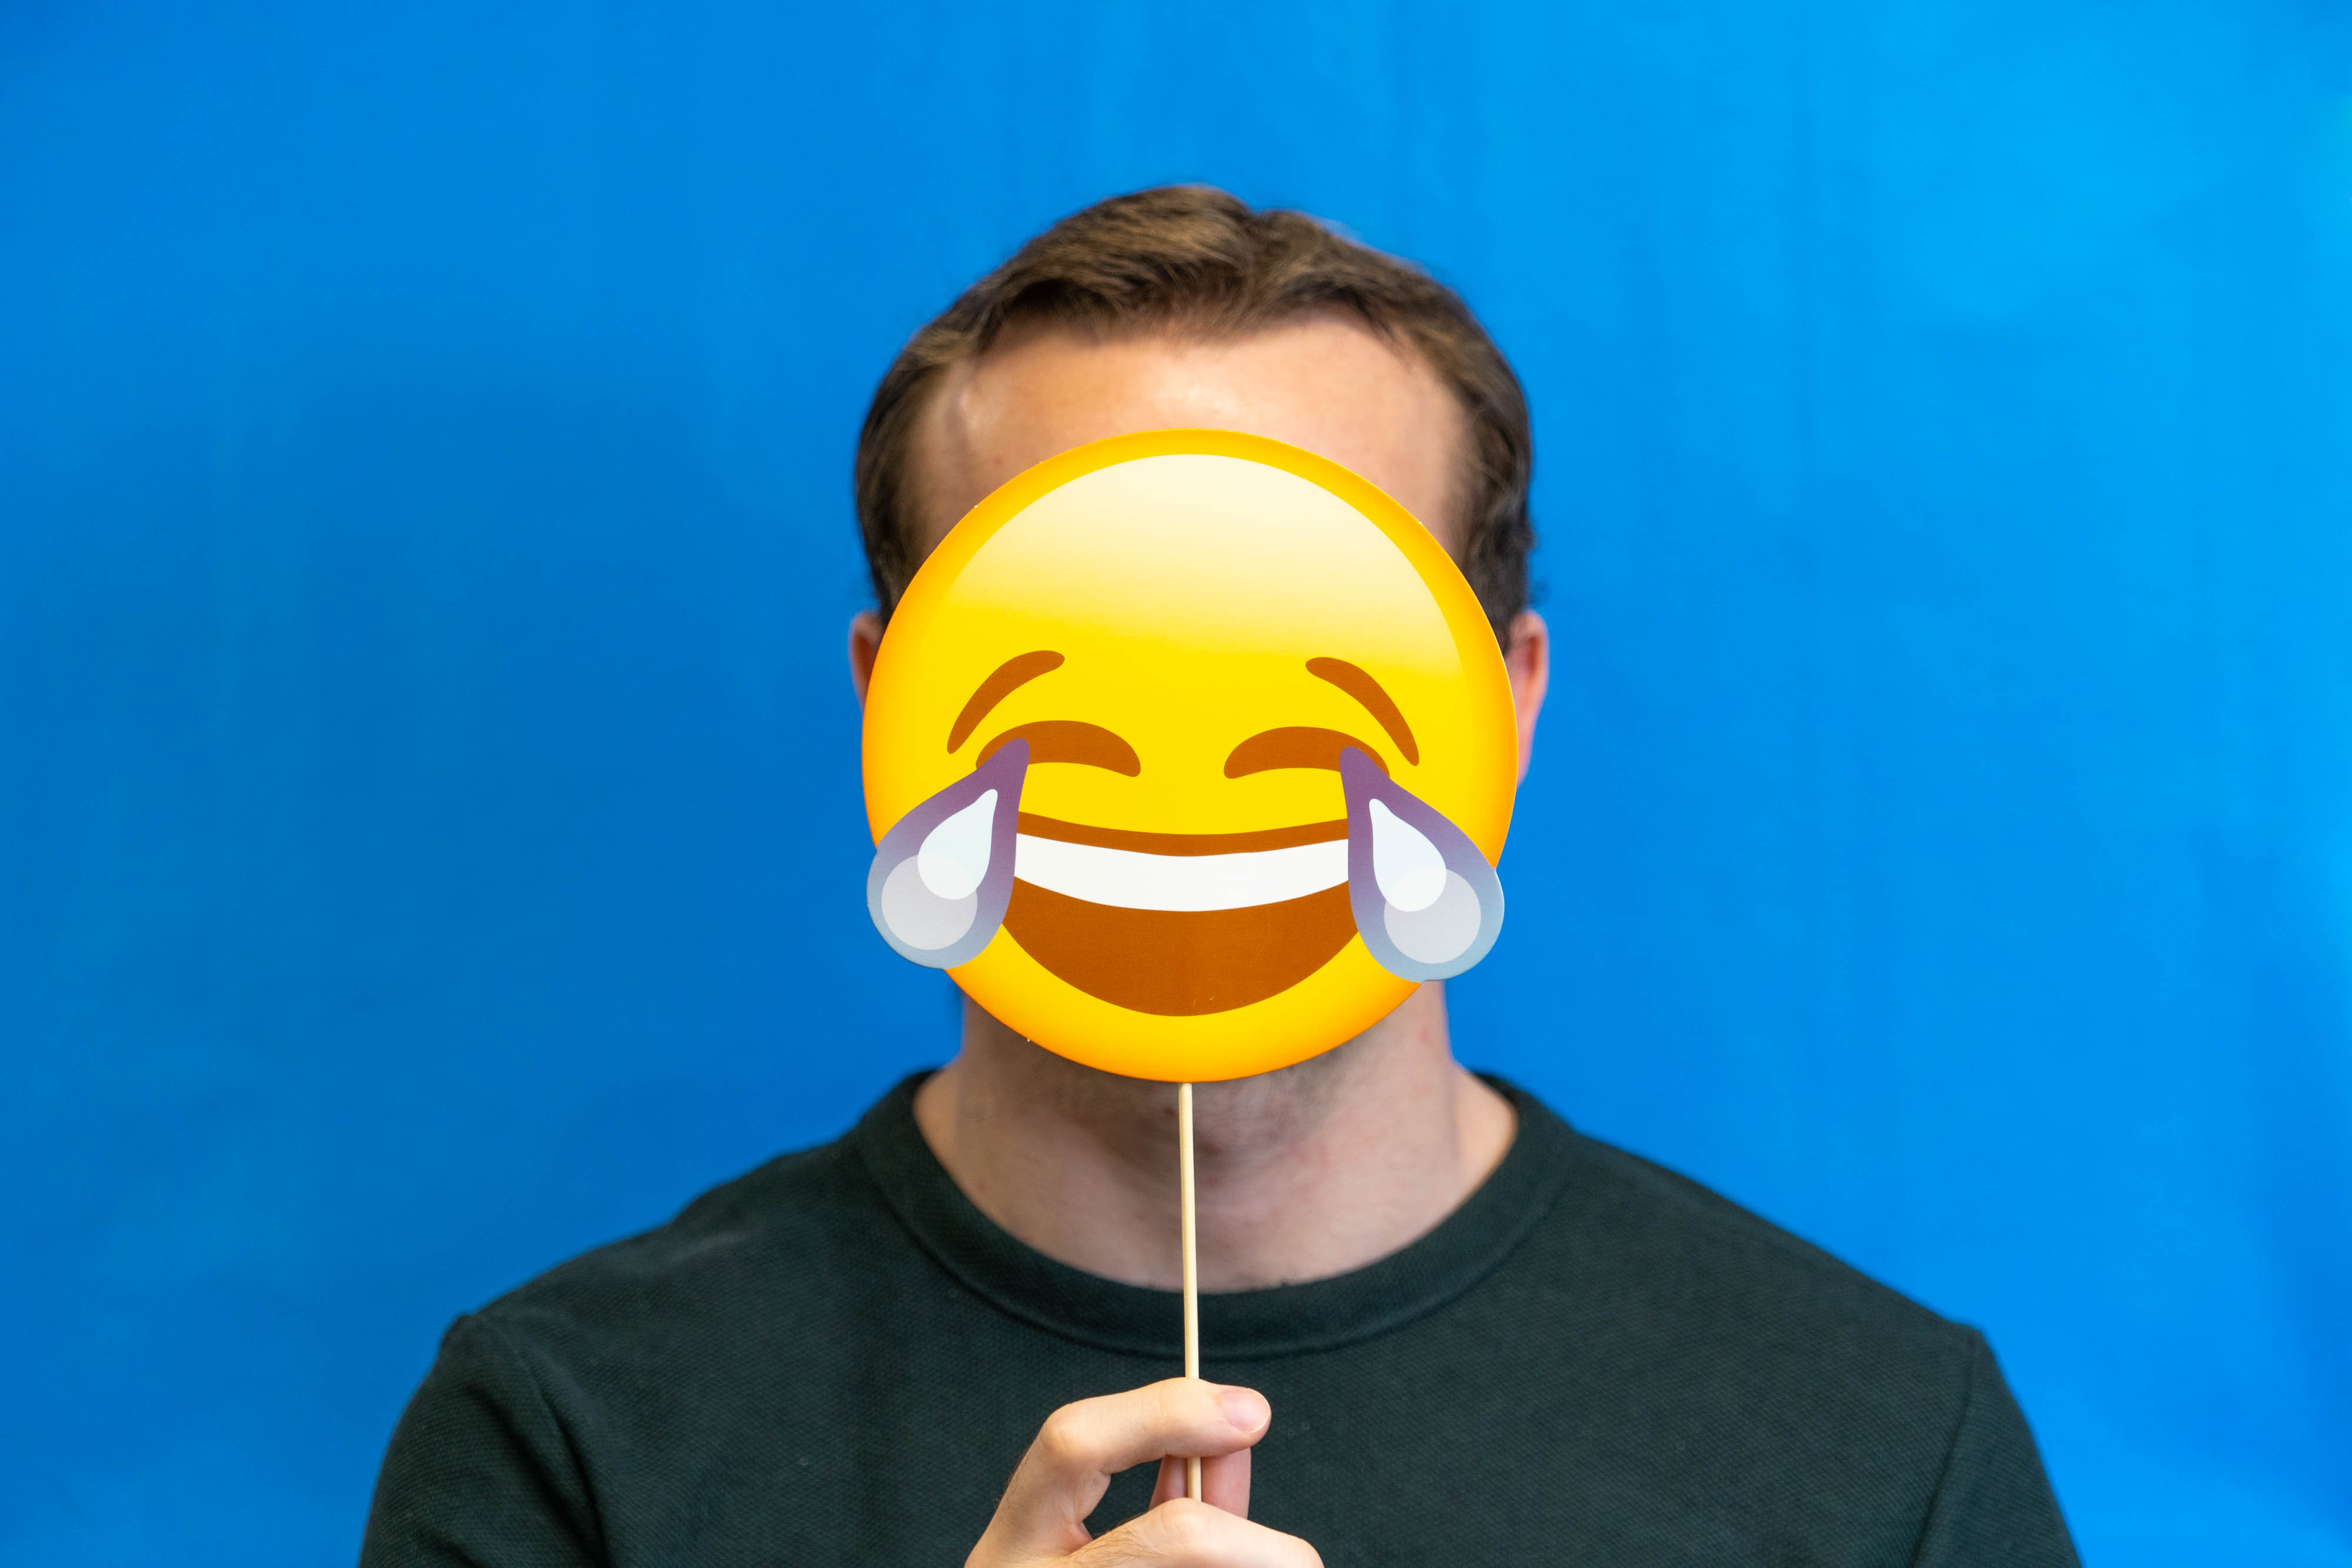 File:Man a laughing emoji mask.jpg - Wikimedia Commons